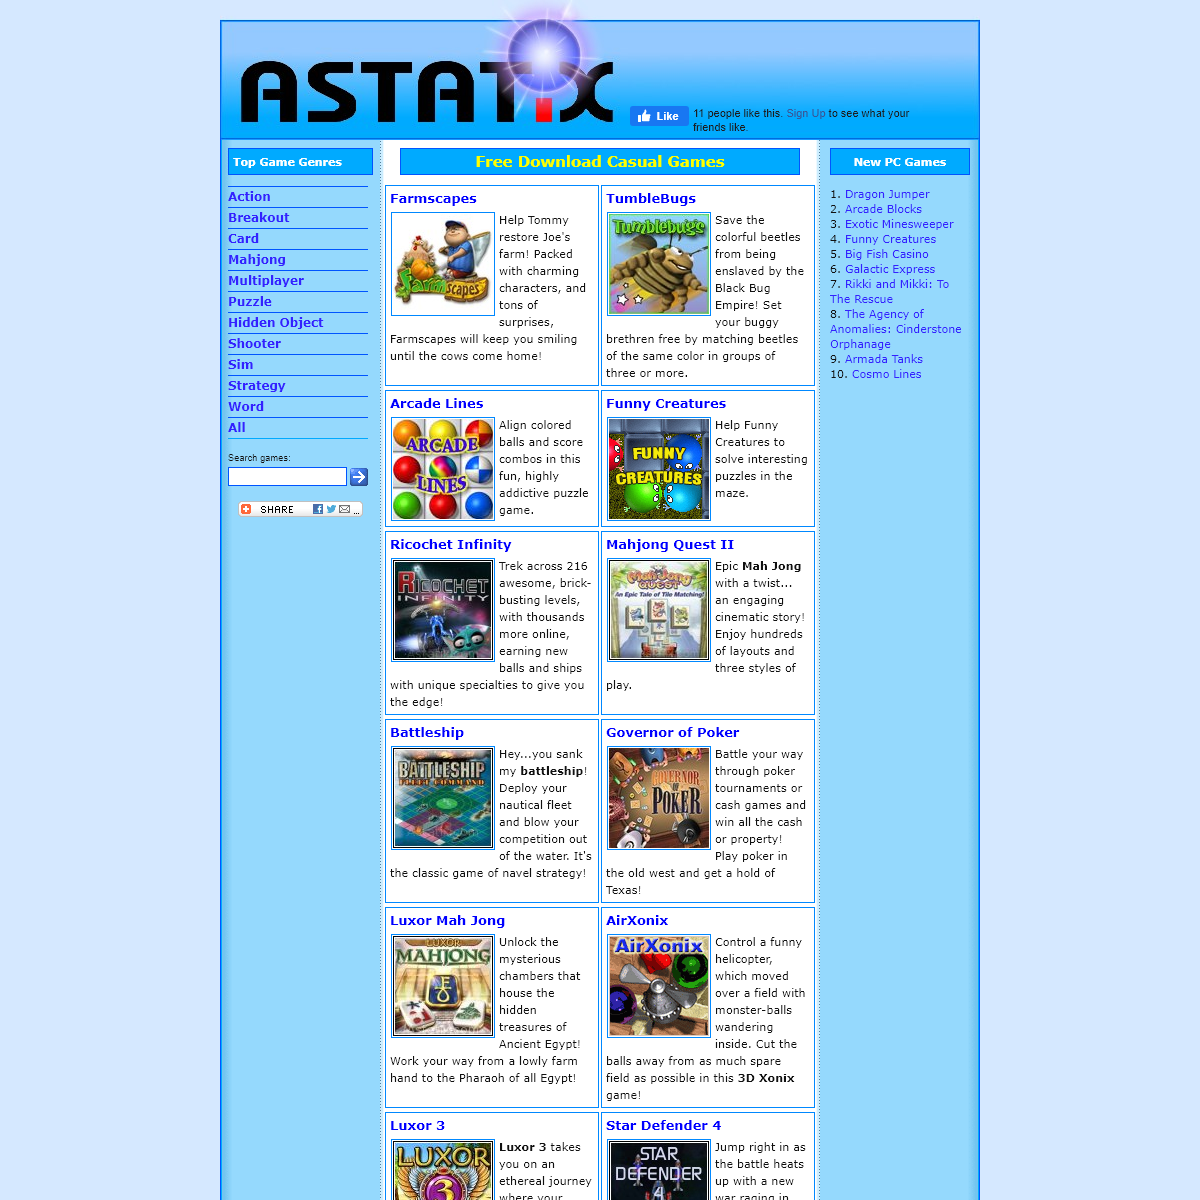 A complete backup of astatix.com